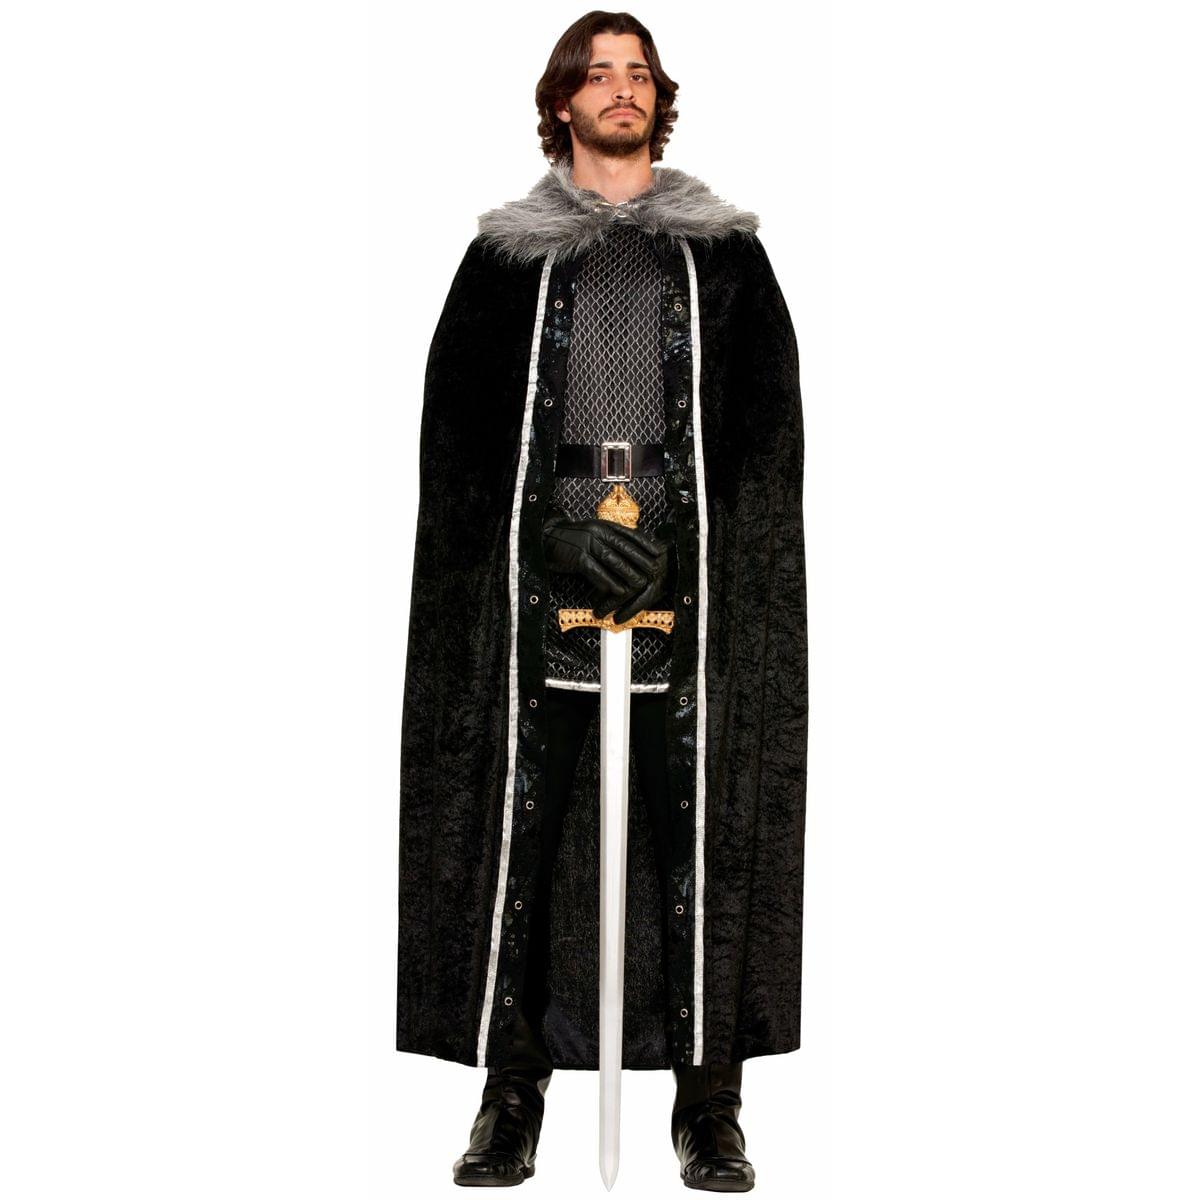 Medieval Fantasy Black W/Faux Fur Trim Adult Costume Cape